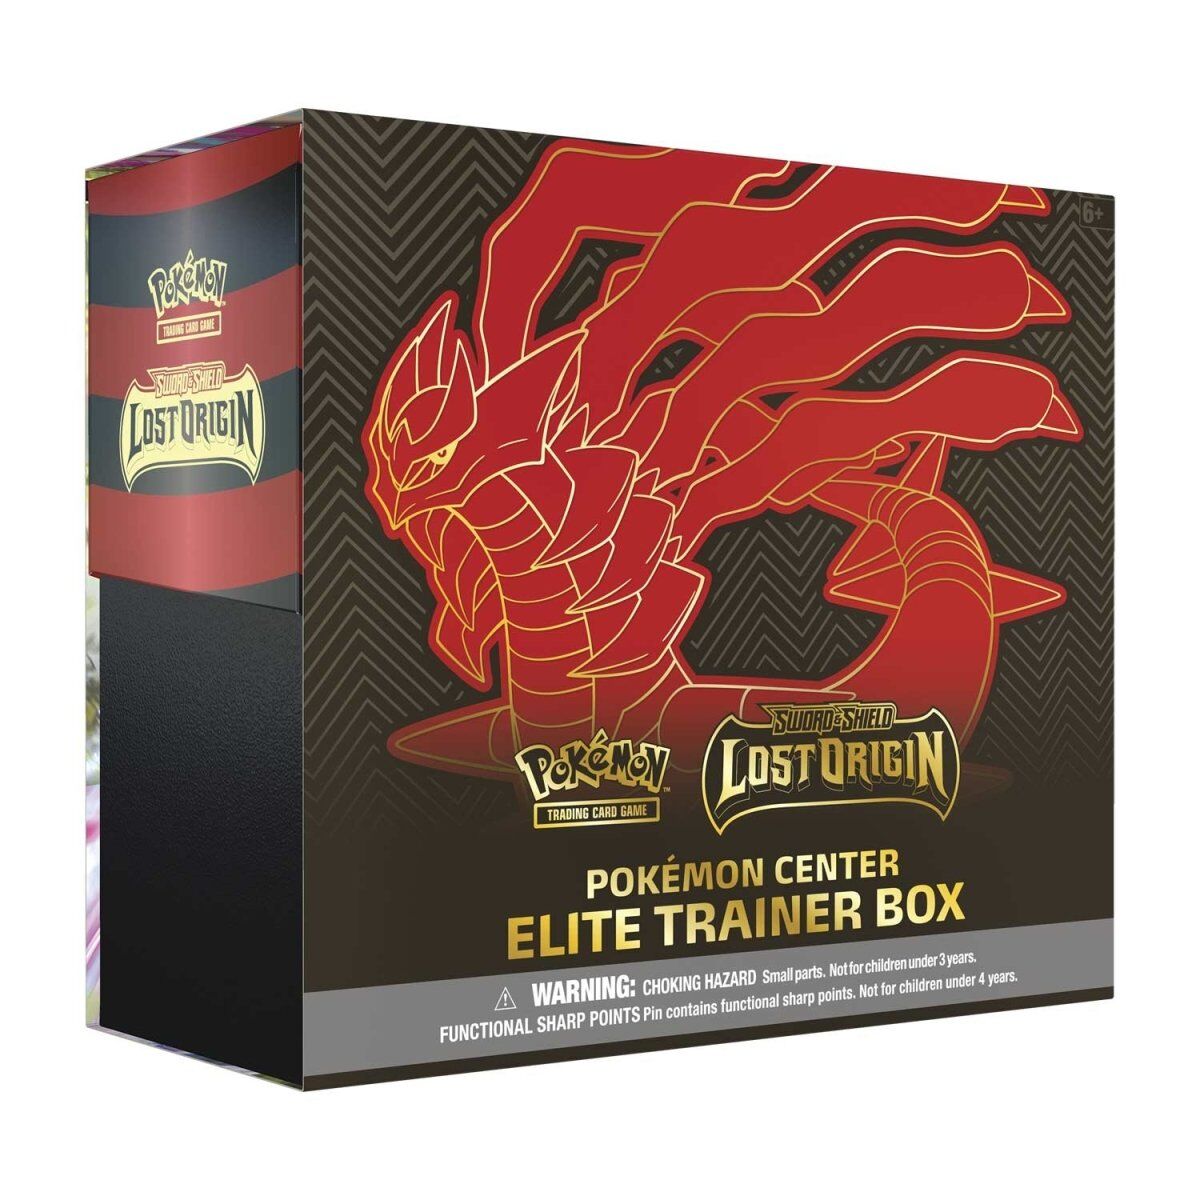 Pokémon Center Elite Trainerbox Sword & Shield Lost Origin Giratina - EN